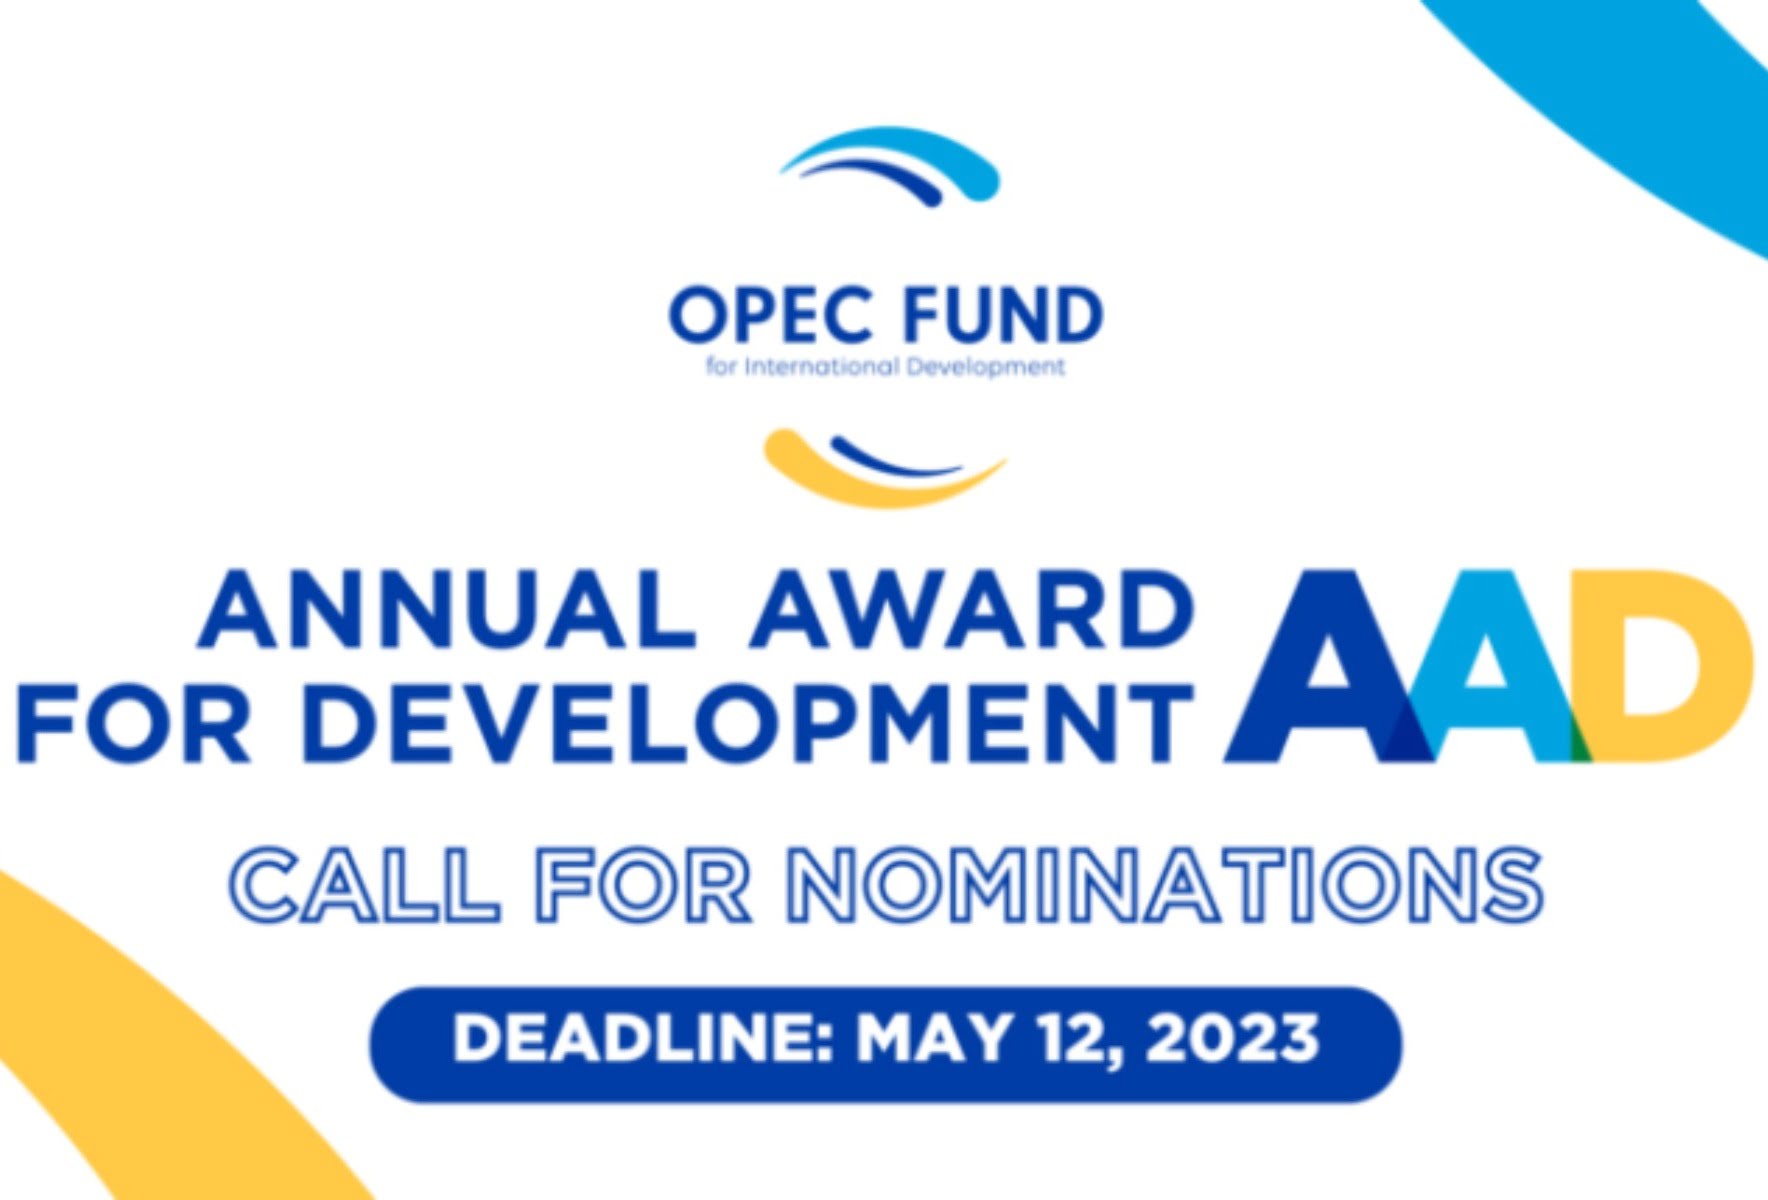 OPEC Fund Annual Award 2023 for Development